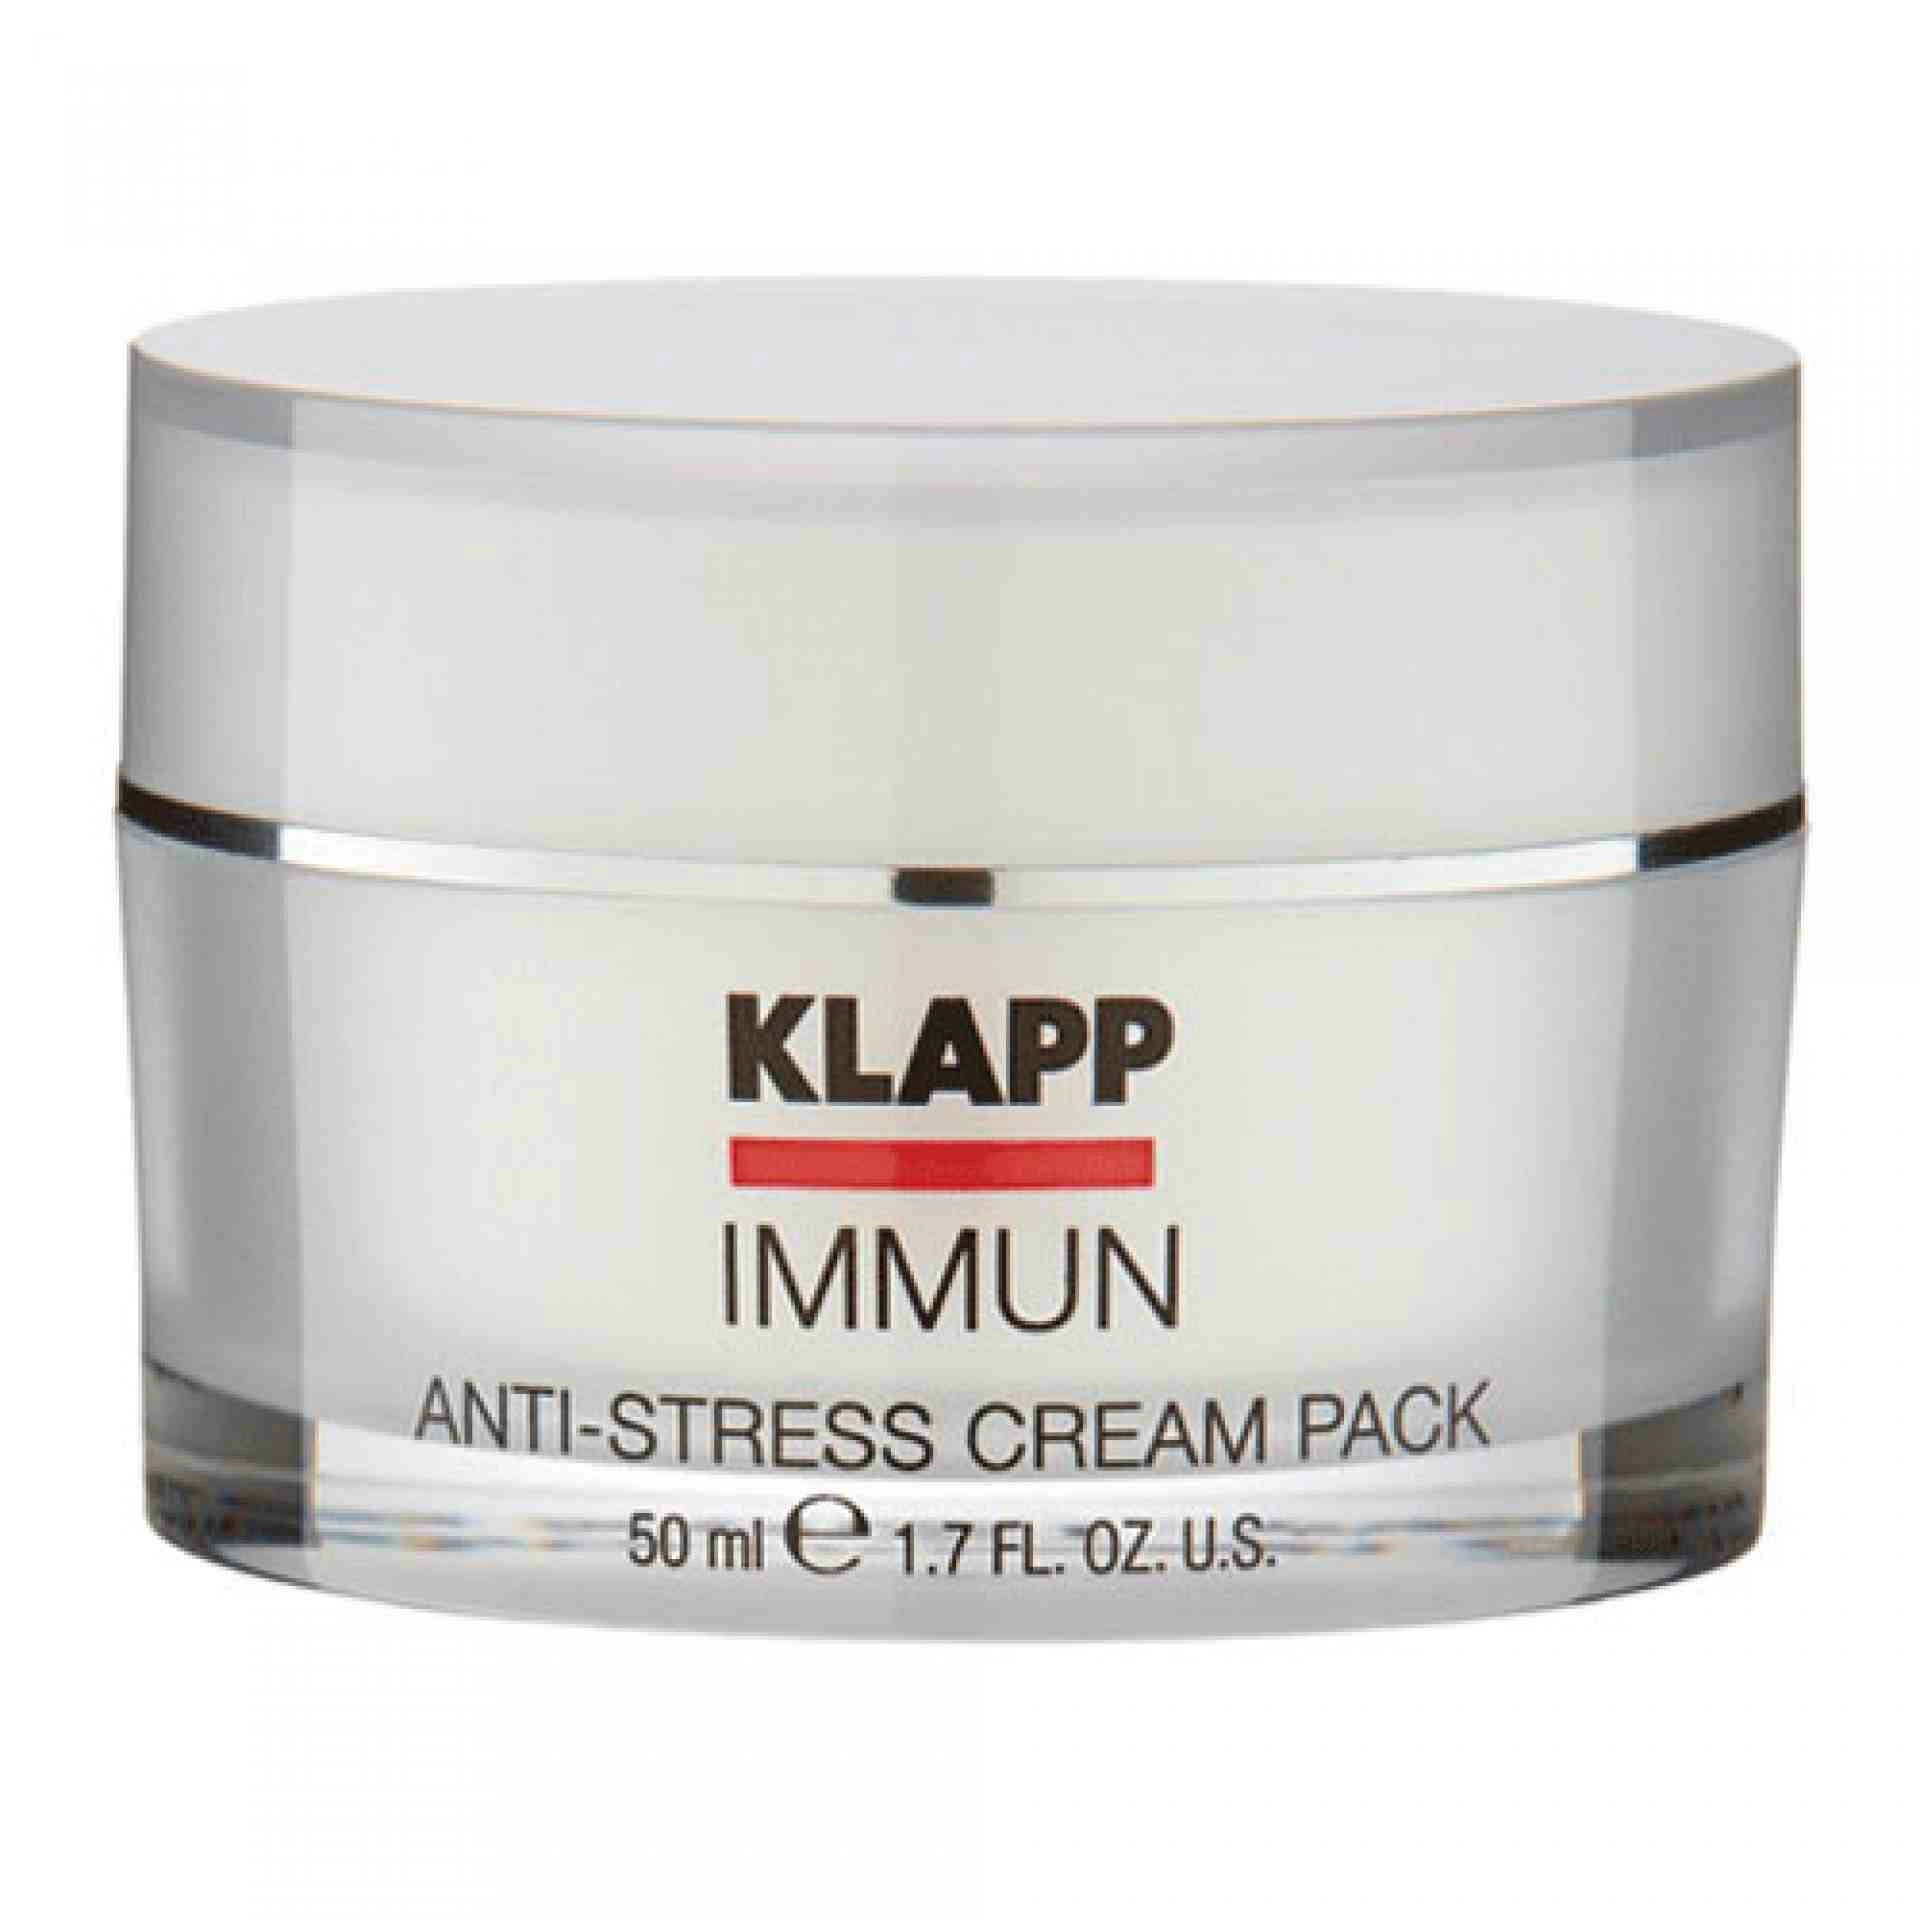 Anti-Stress Cream Pack | Crema Antiestrés 50ml - Immun - Klapp ®